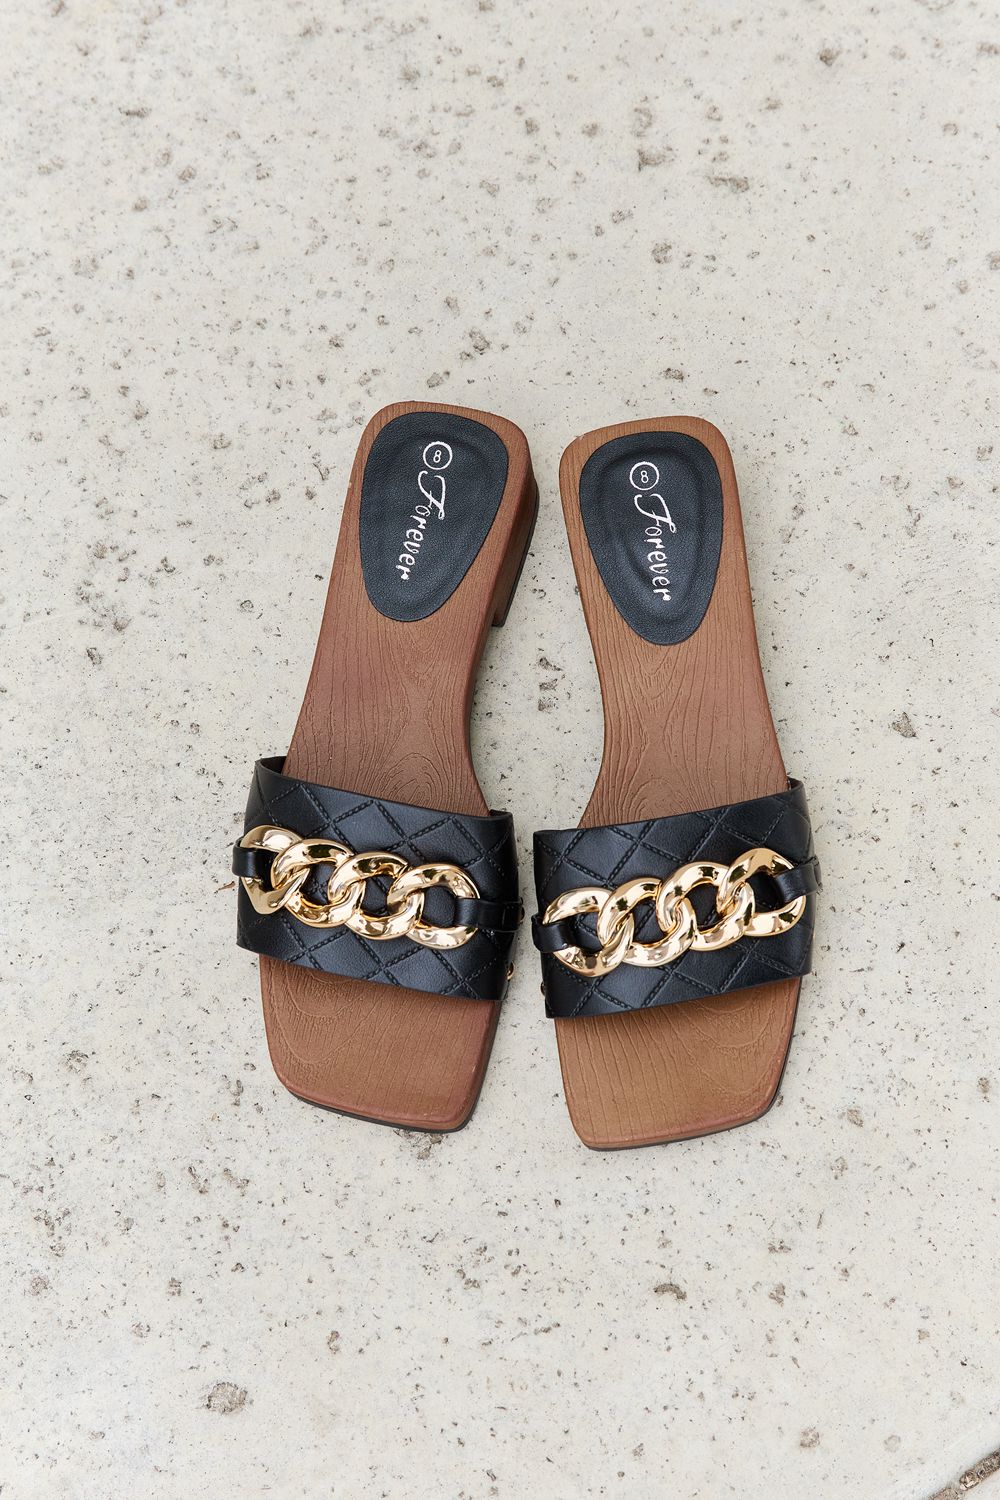 Forever Link Square Toe Chain Detail Clog Sandal in Black - Tigbul's Fashion